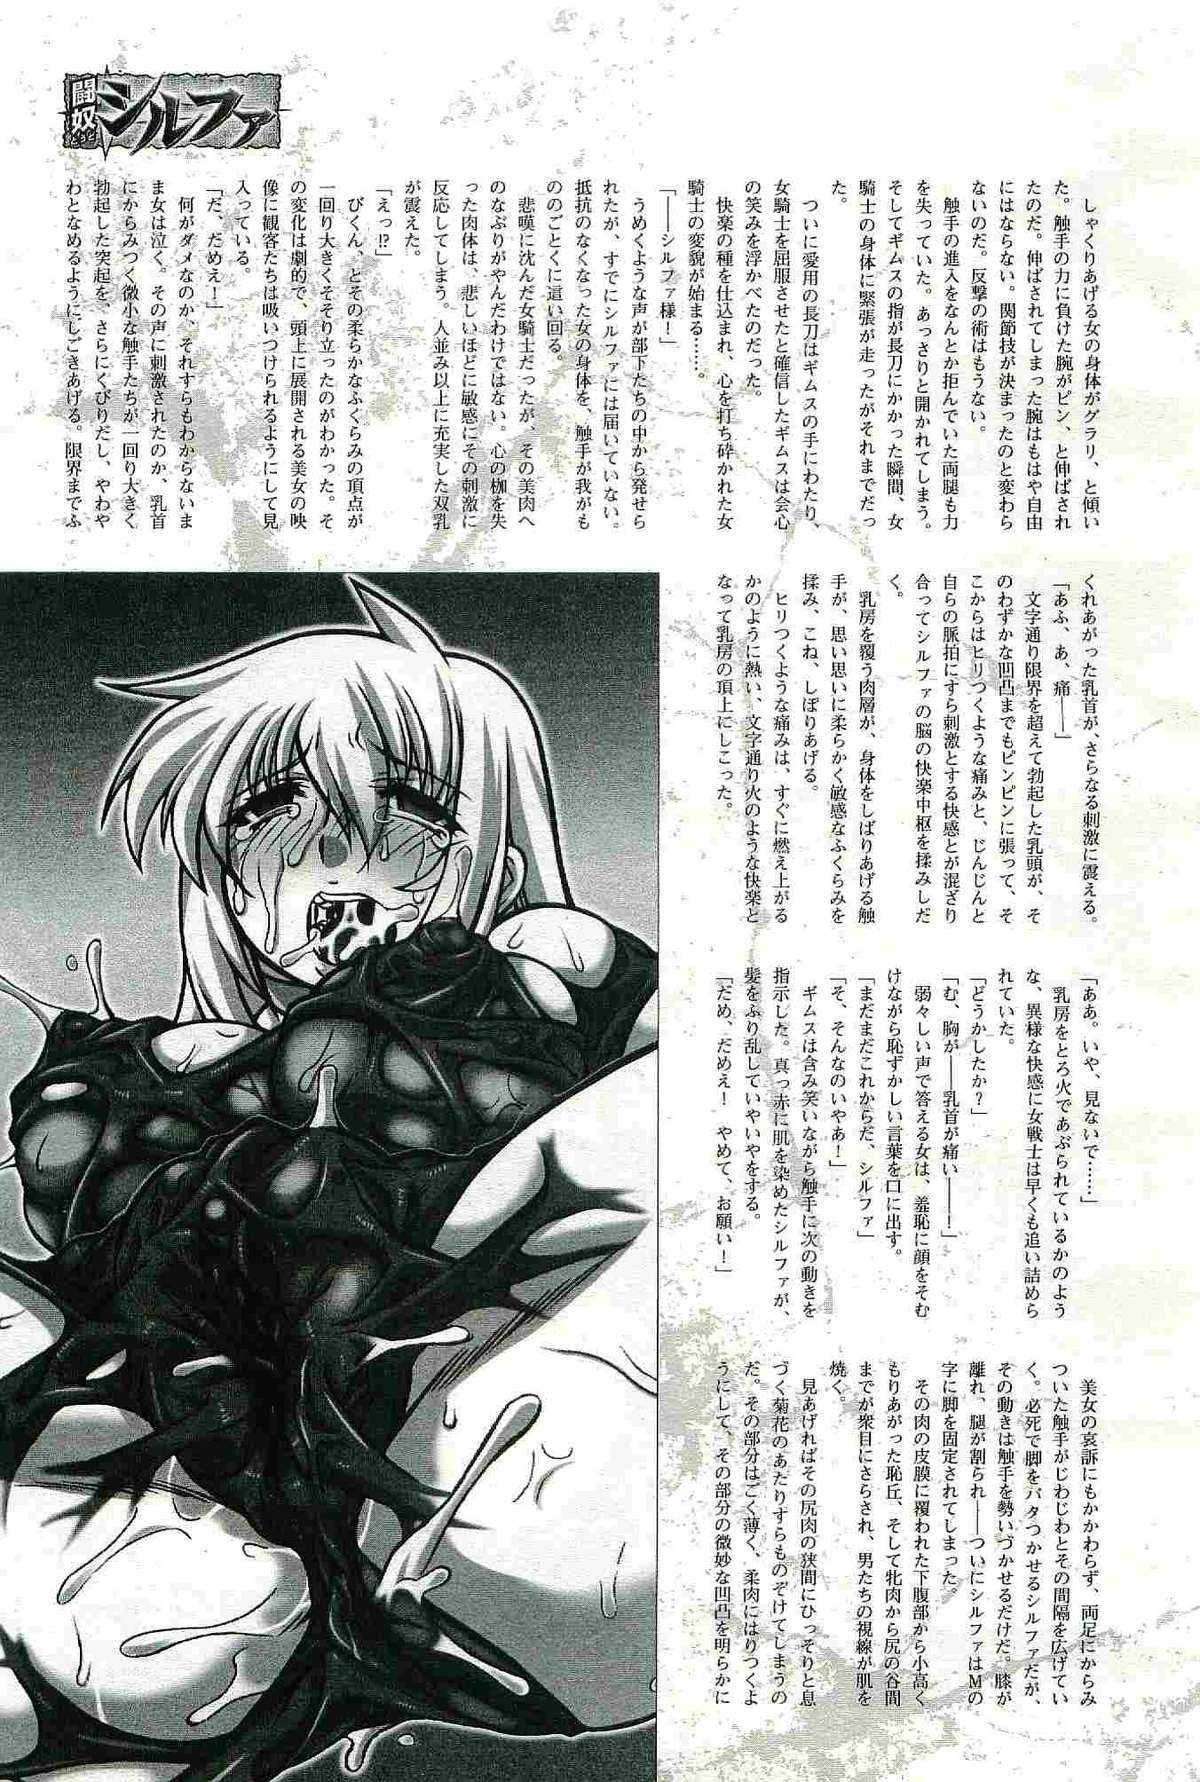 2D Dream Magazine Vol.18 二次元ドリームマガジン vol. 18